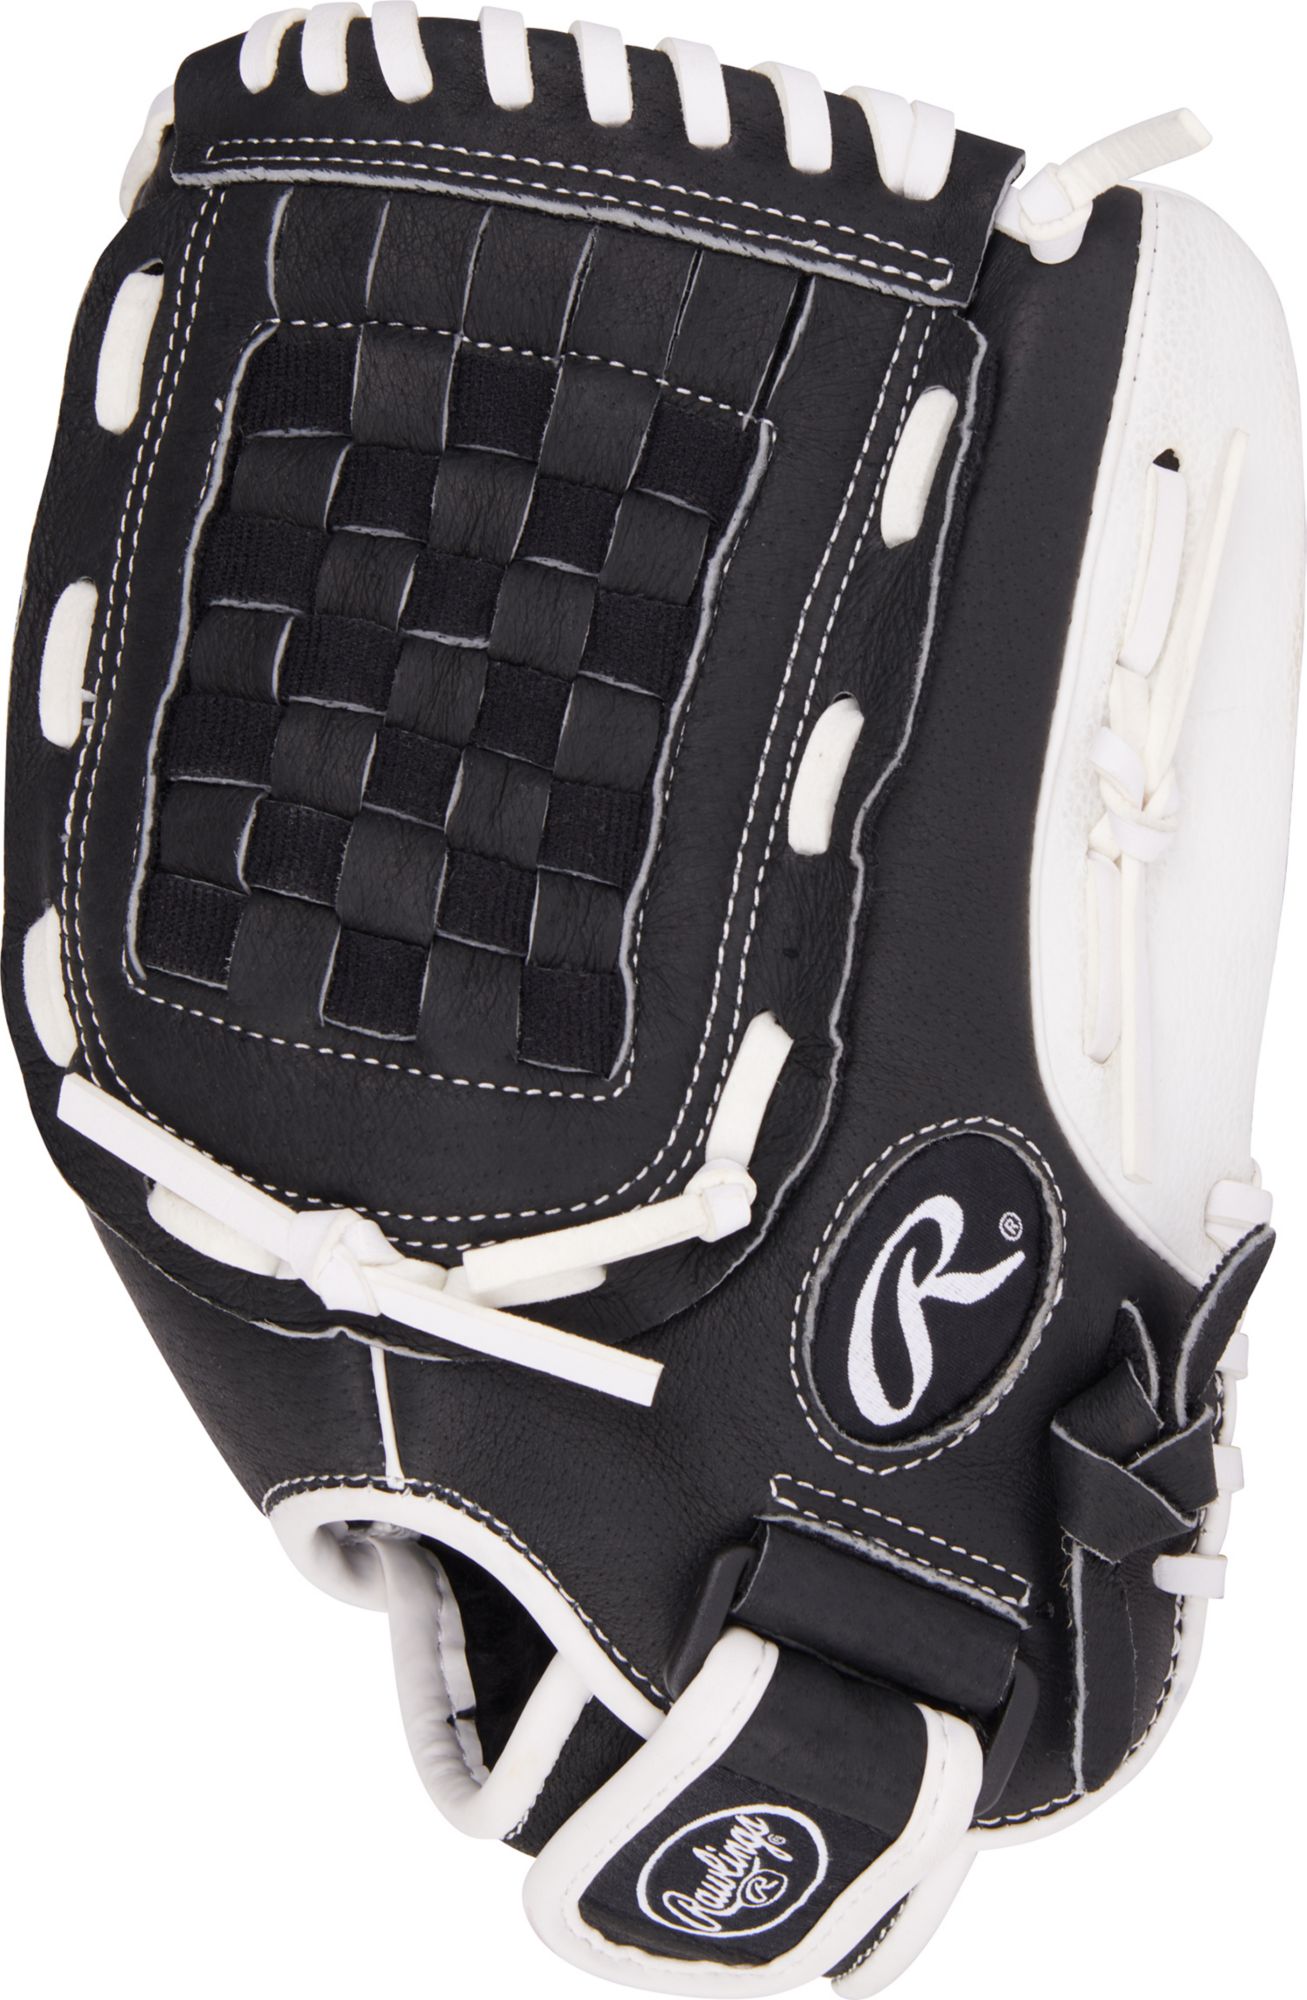 Rawlings 12'' Girls' Highlight Series Softball Glove